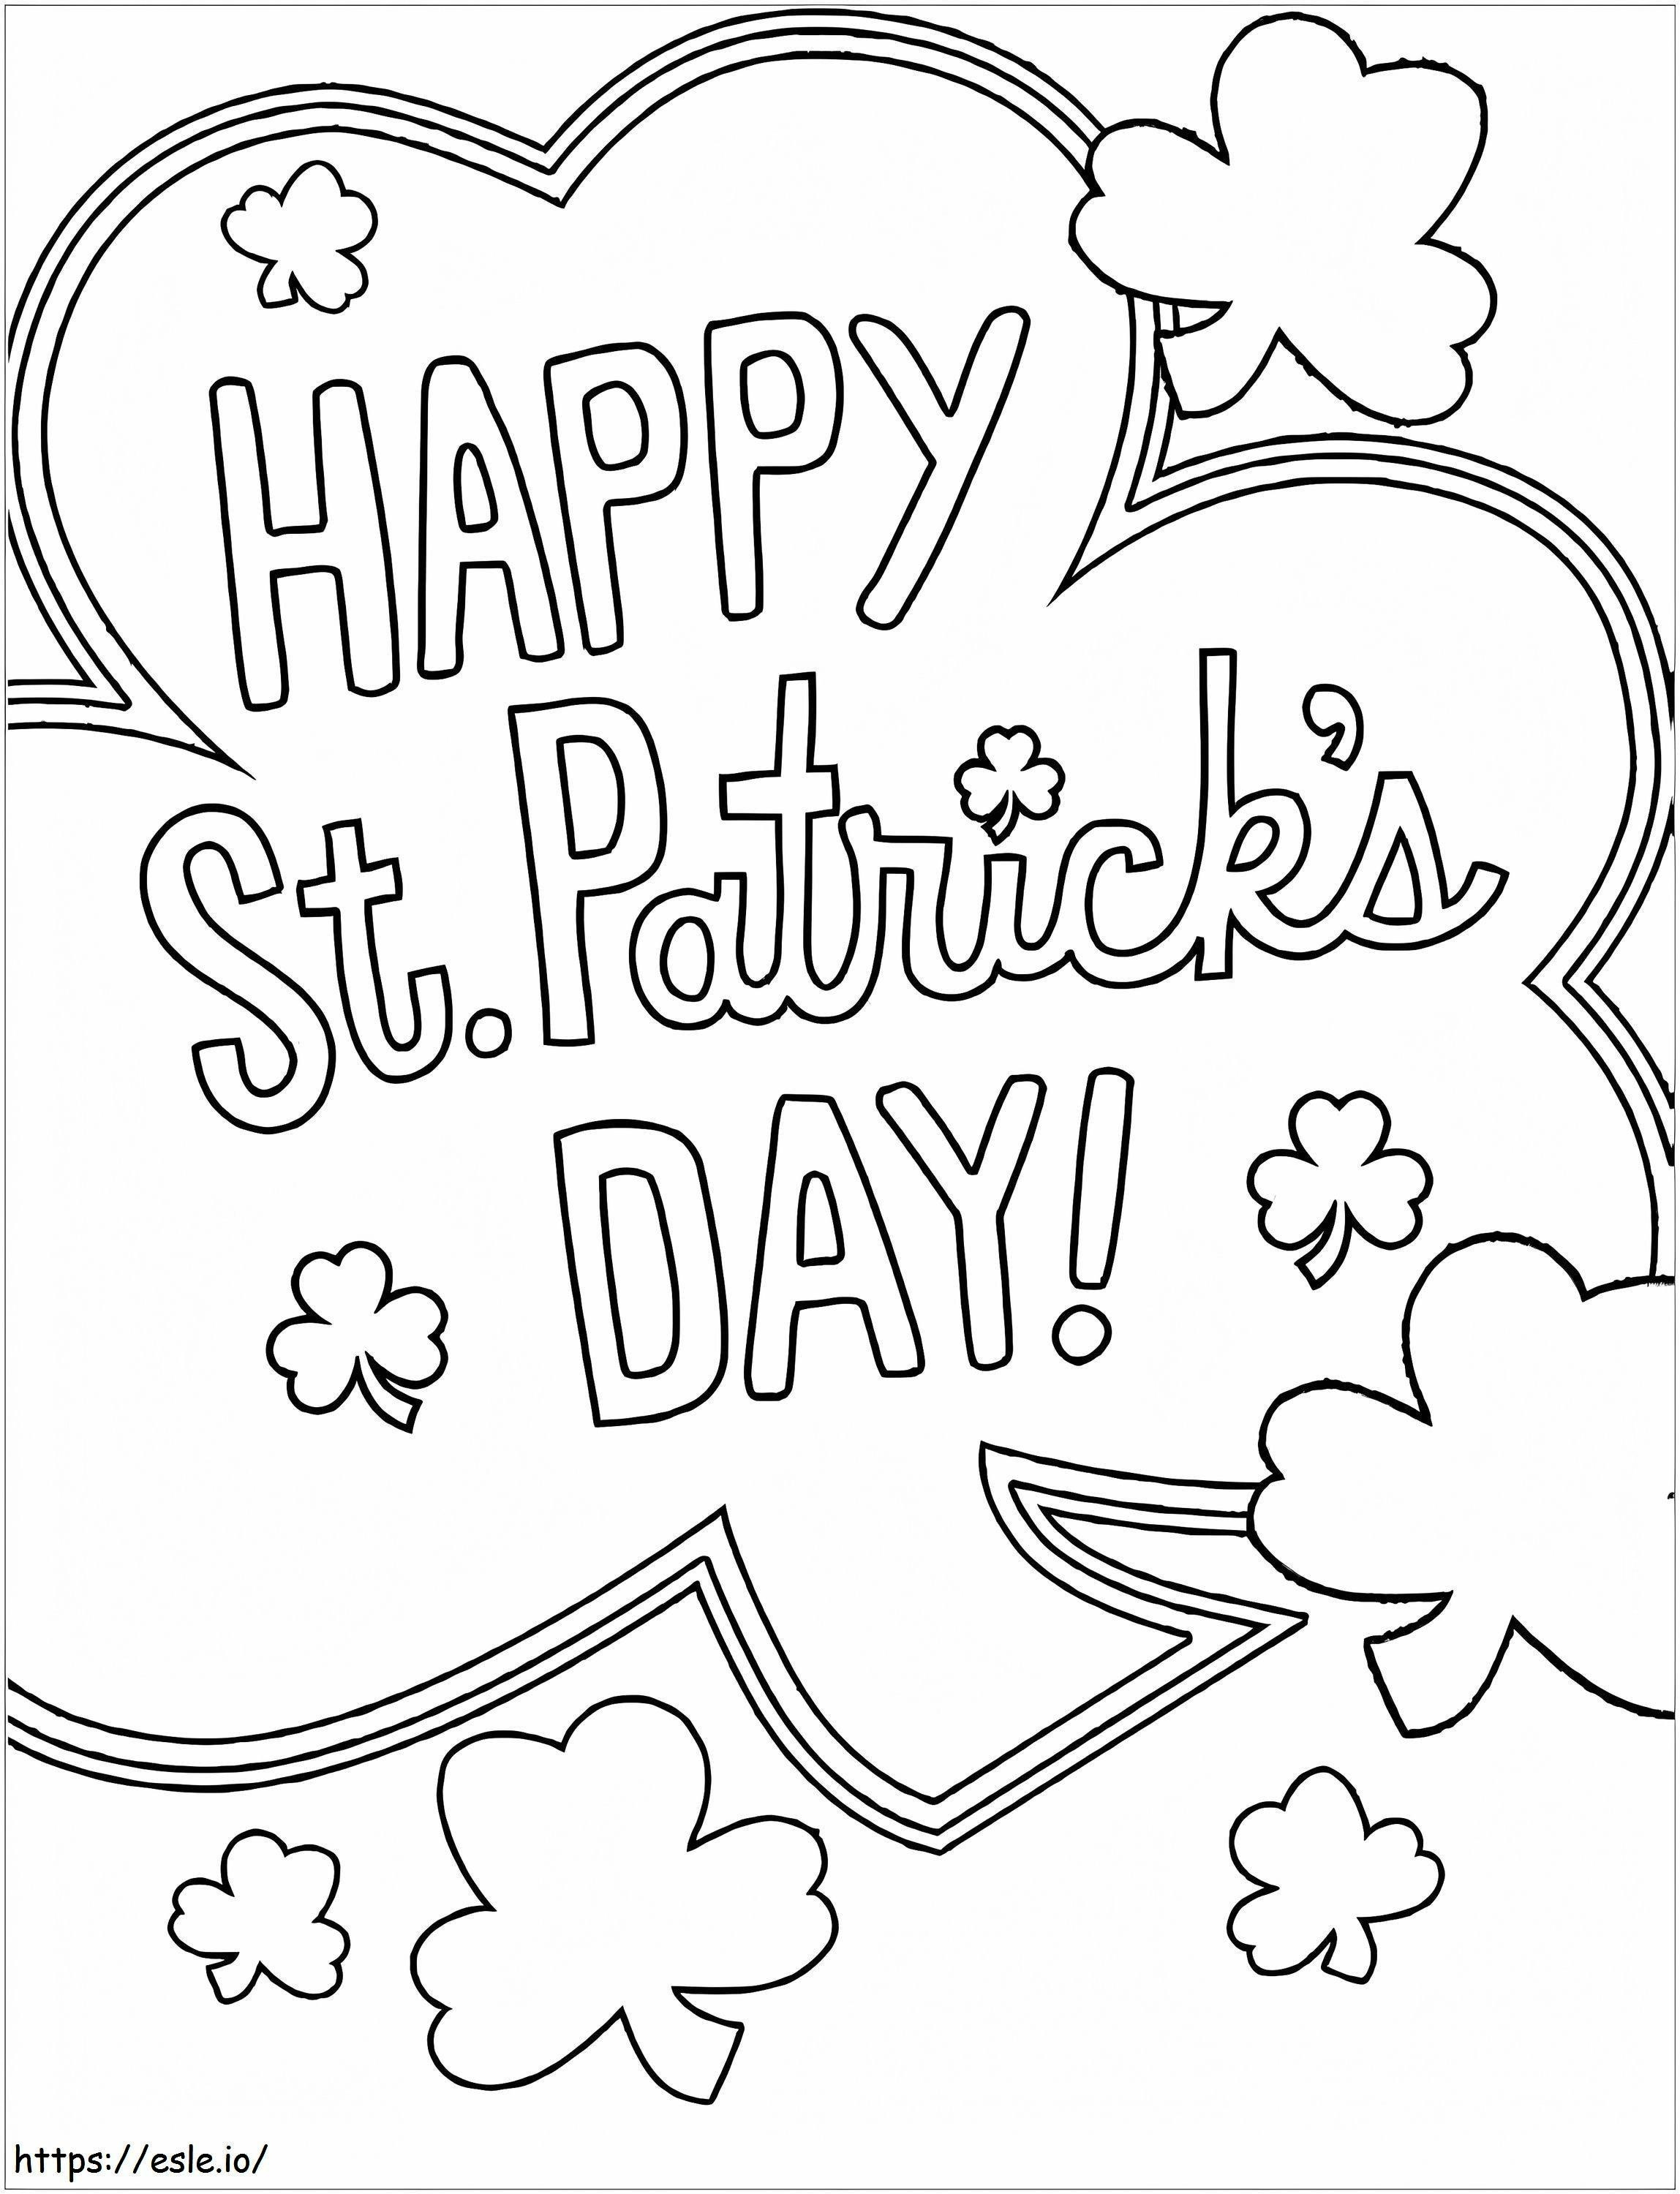 Happy Saint Patricks Day 4 coloring page